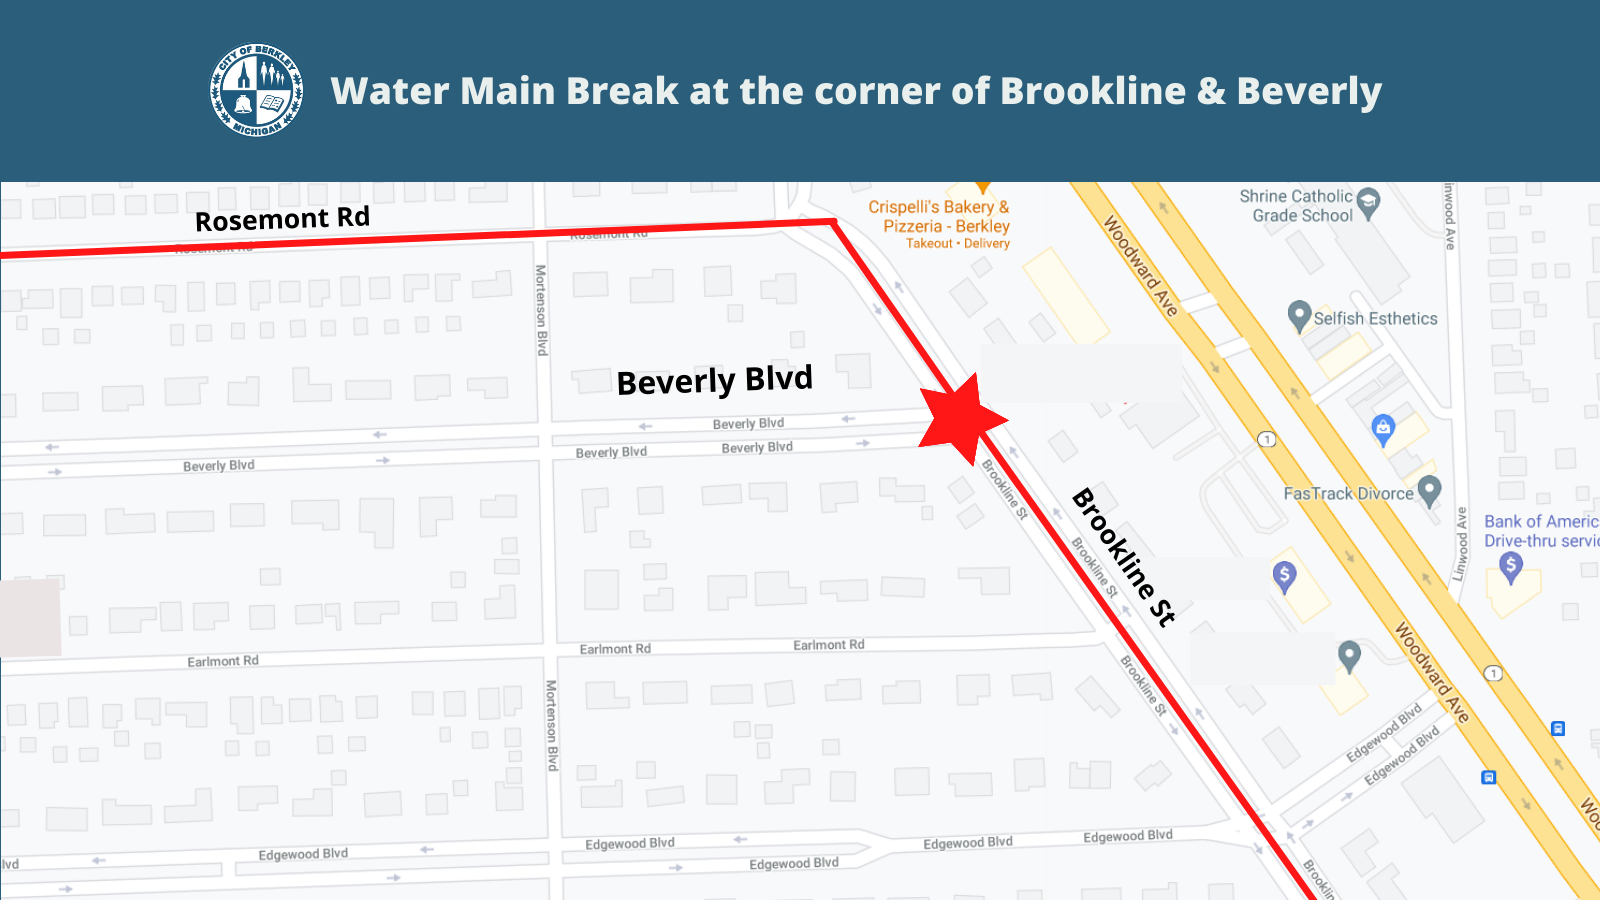 Water Main Break Maps_Brookline and Beverly